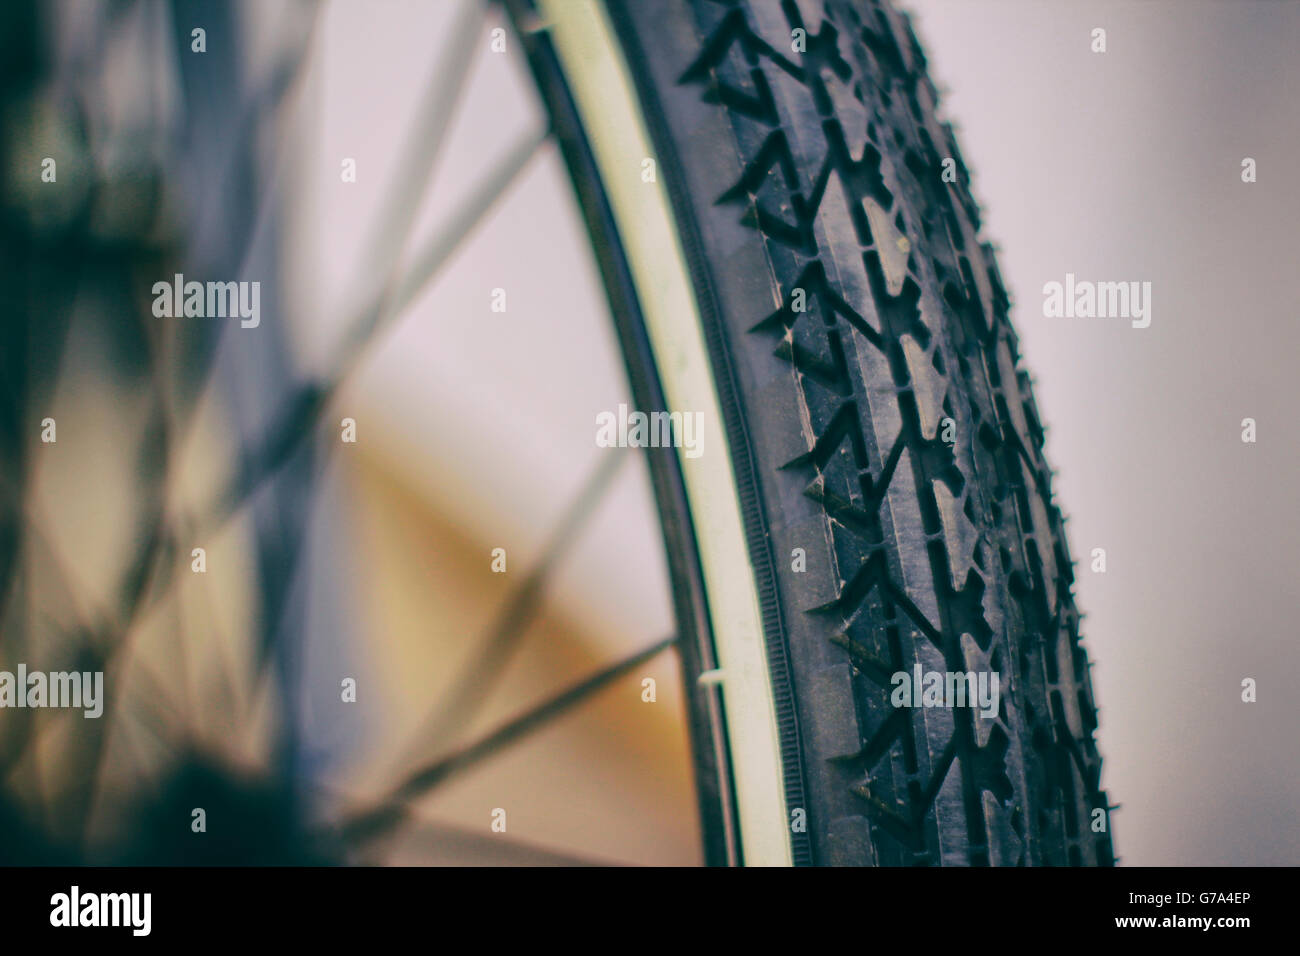 Photograph of a bicycle tire closeup Stock Photo